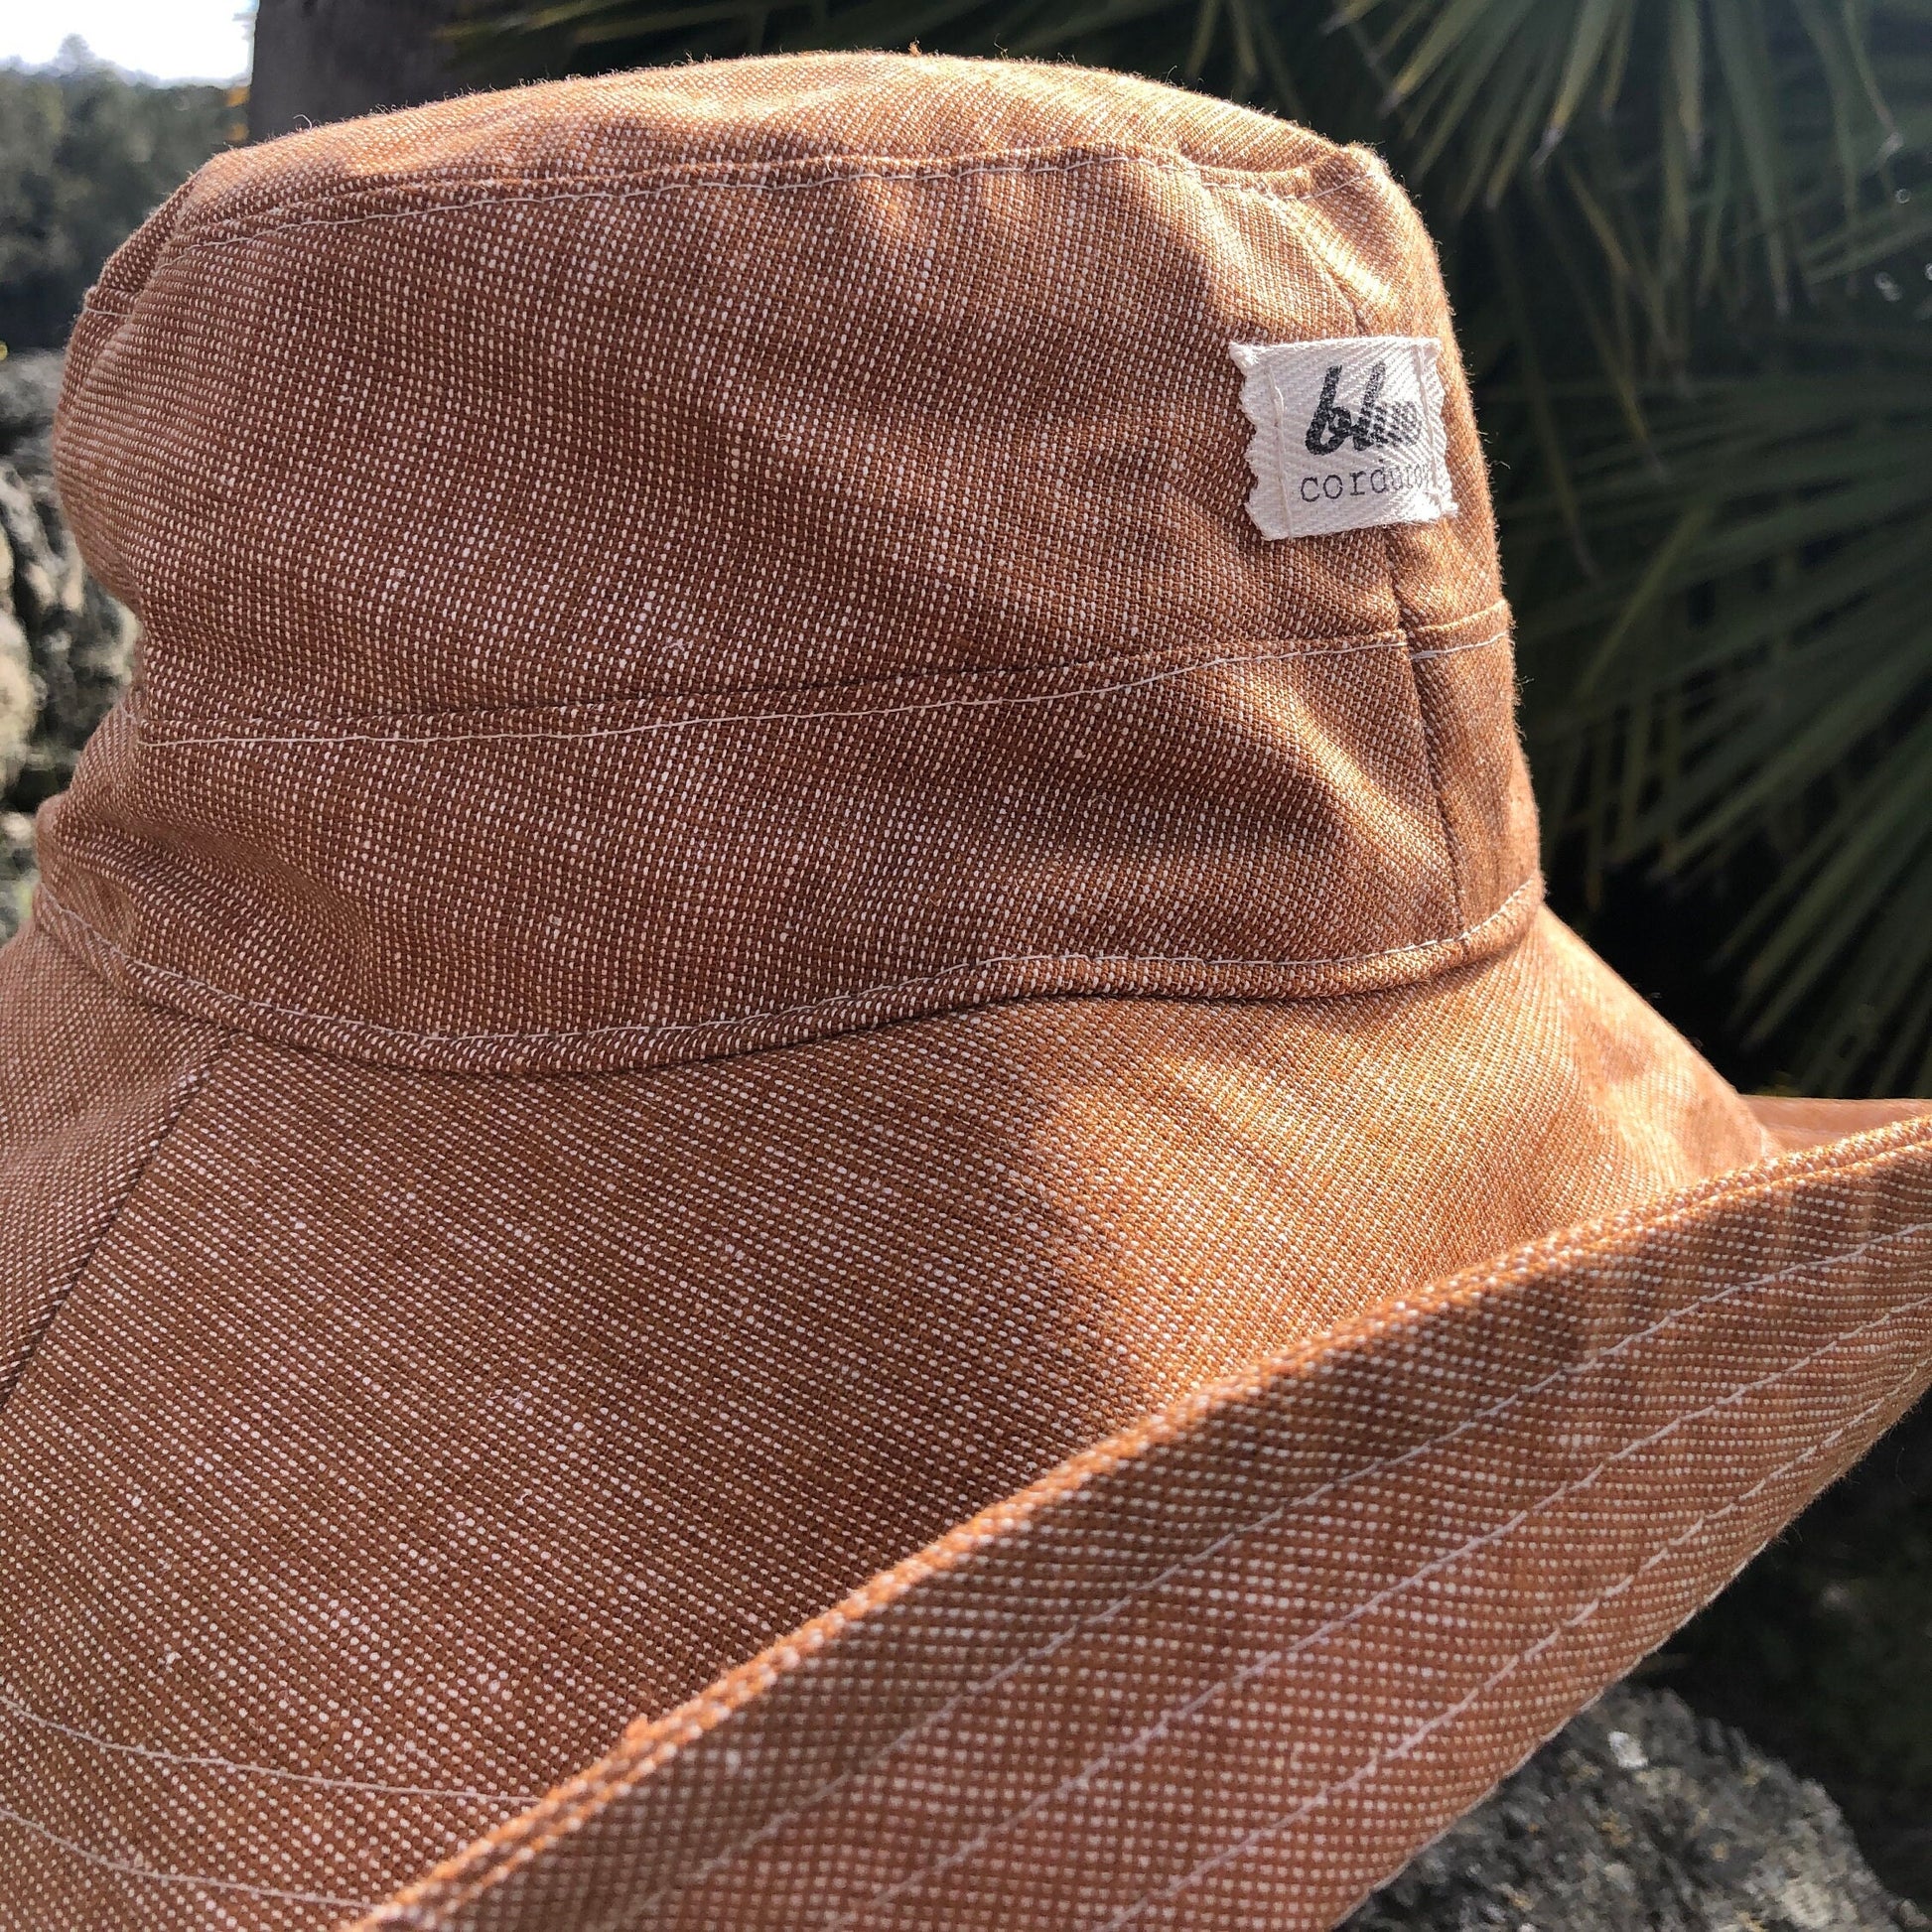 Linen Sun Hat, Wide Brim, Gardening Hat, Womens Summer Accessory, Foldable Beach Hat, Beach Vacation Accessory, Rust Brim Hat